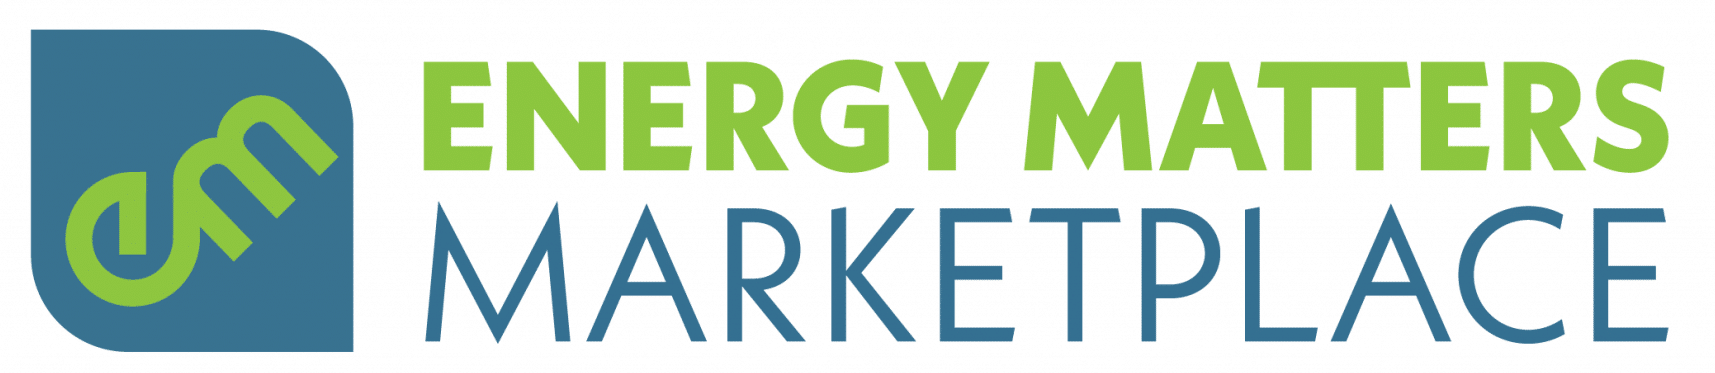 Energy Matters Marketplace